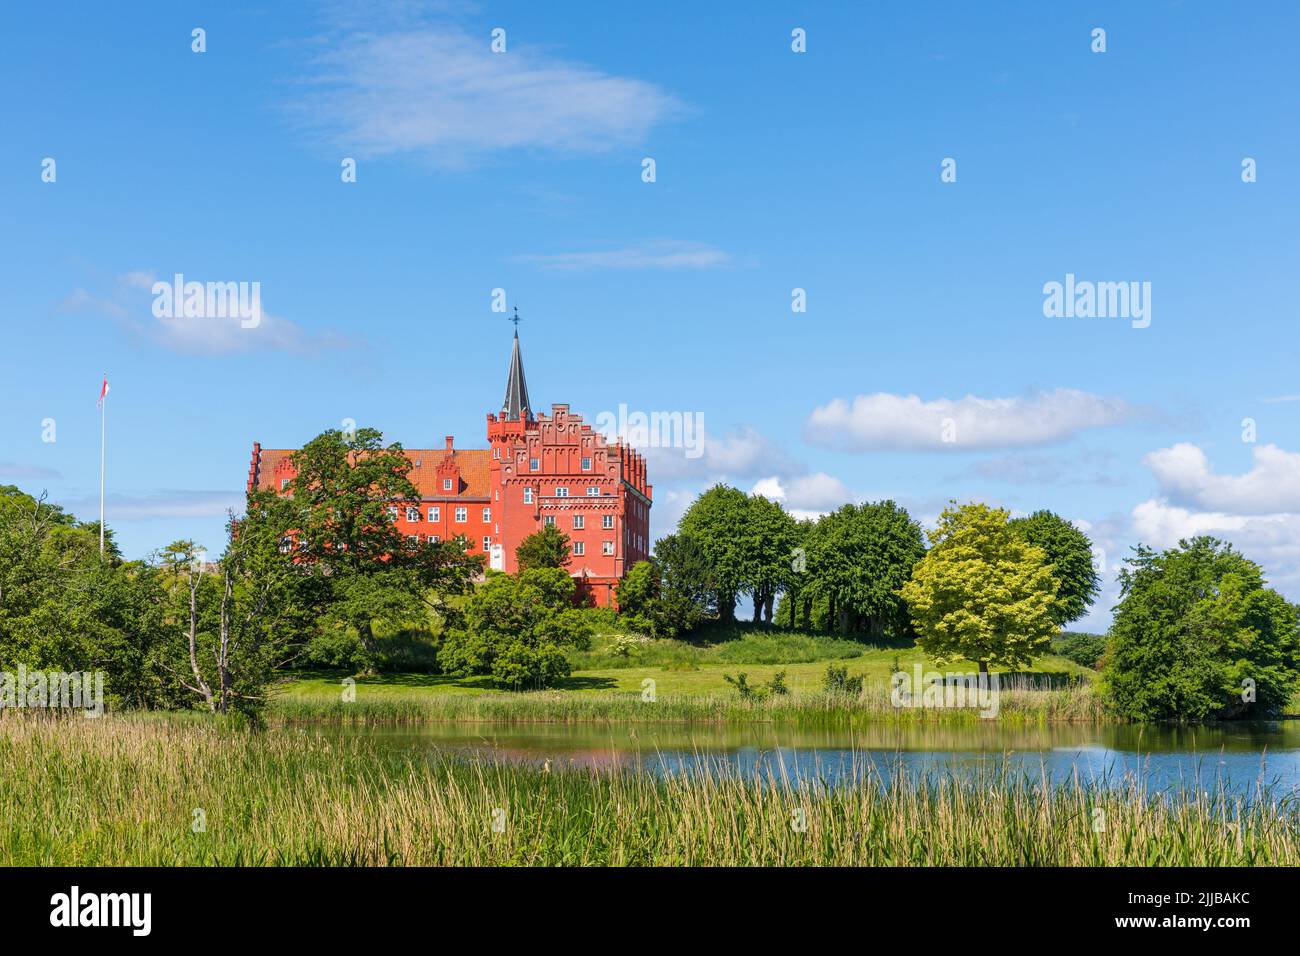 Schloss und Park aus dem 13.. Jahrhundert in Tranekær, Insel Langeland, Dänemark Stockfoto